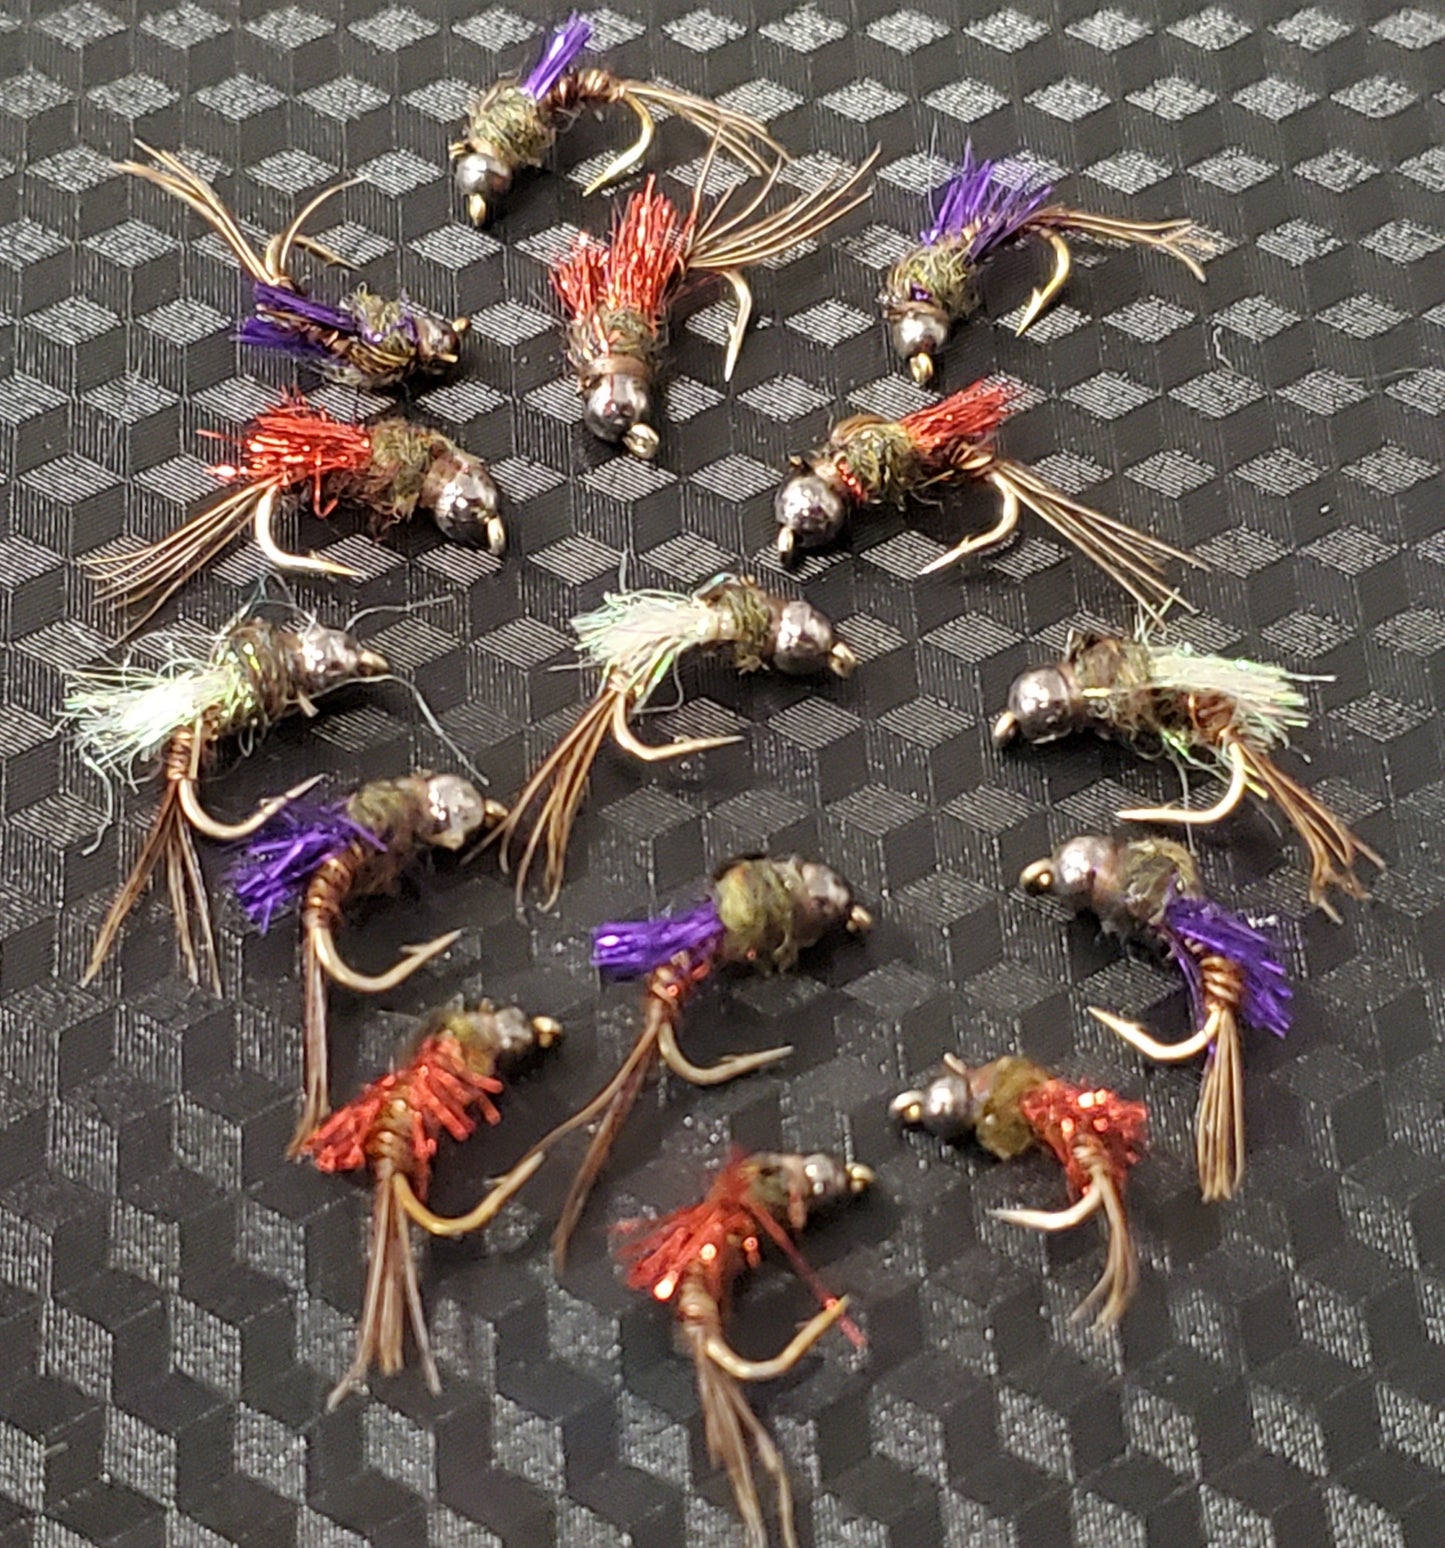 Tungsten Bead Head Lightning Bug Nymphs, Bead Head Pheasant Tail Sparkle Nymphs